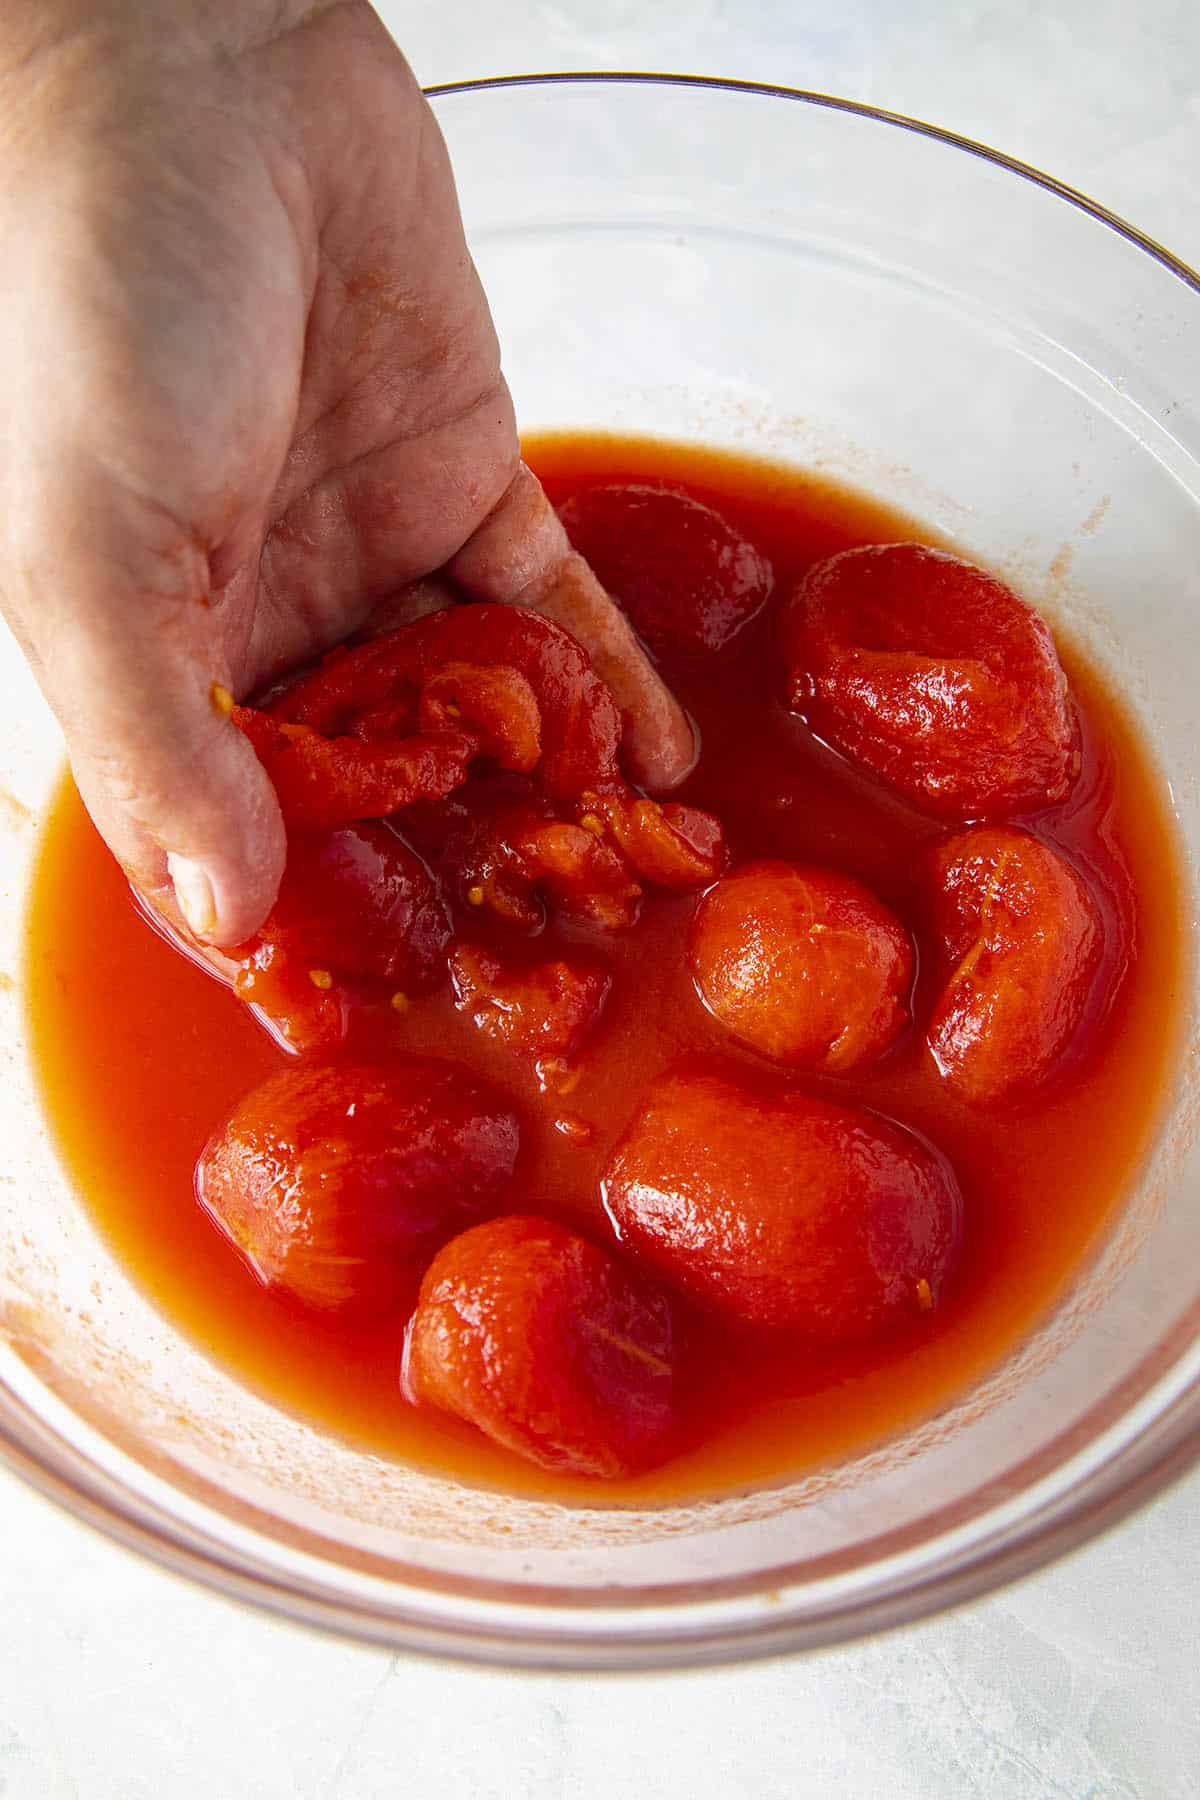 Crushing tomatoes to make Amatriciana sauce